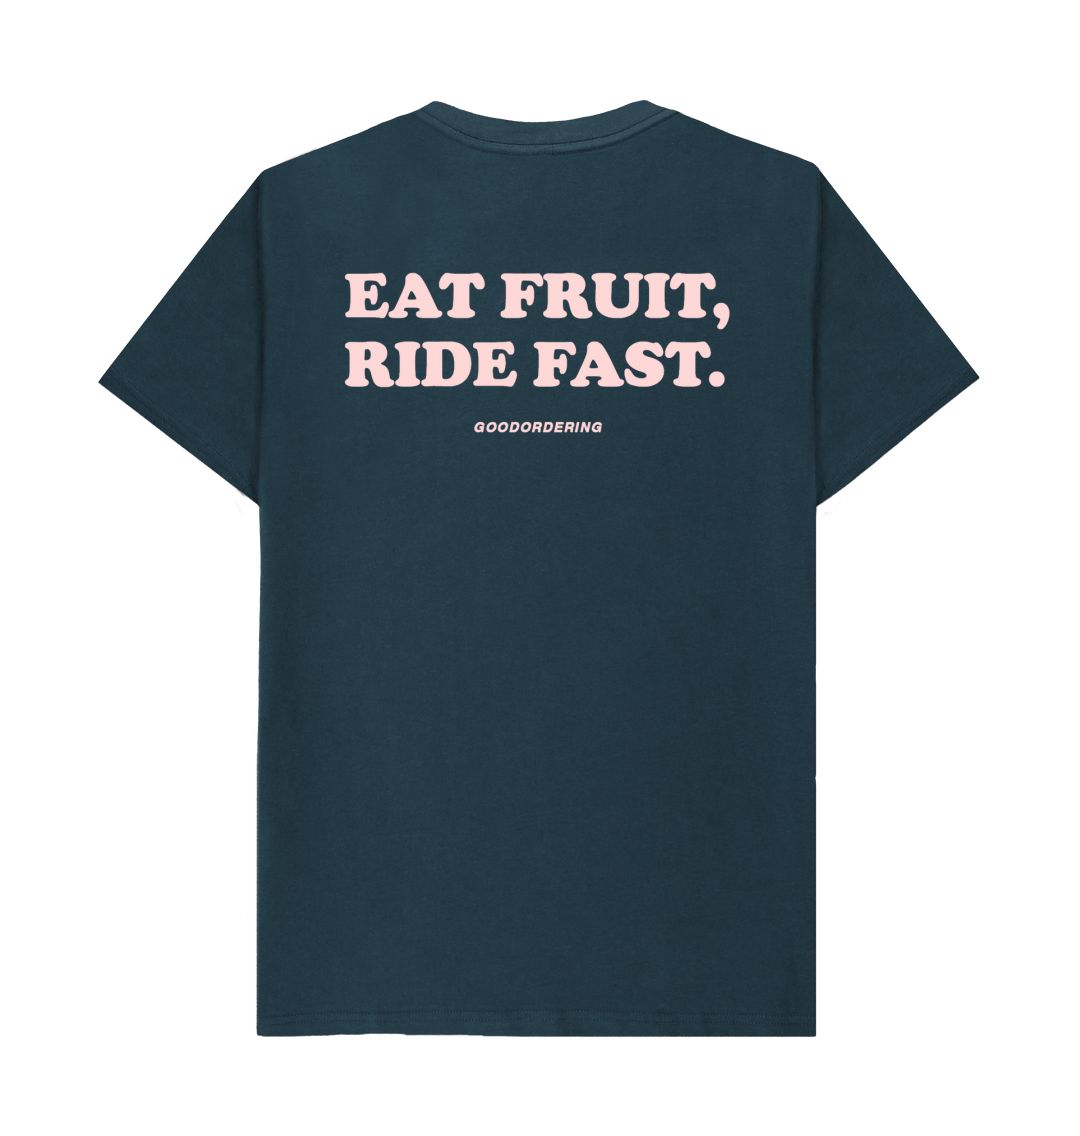 Denim Blue Adults Unisex Eat Fruit, Ride Fast T-shirt